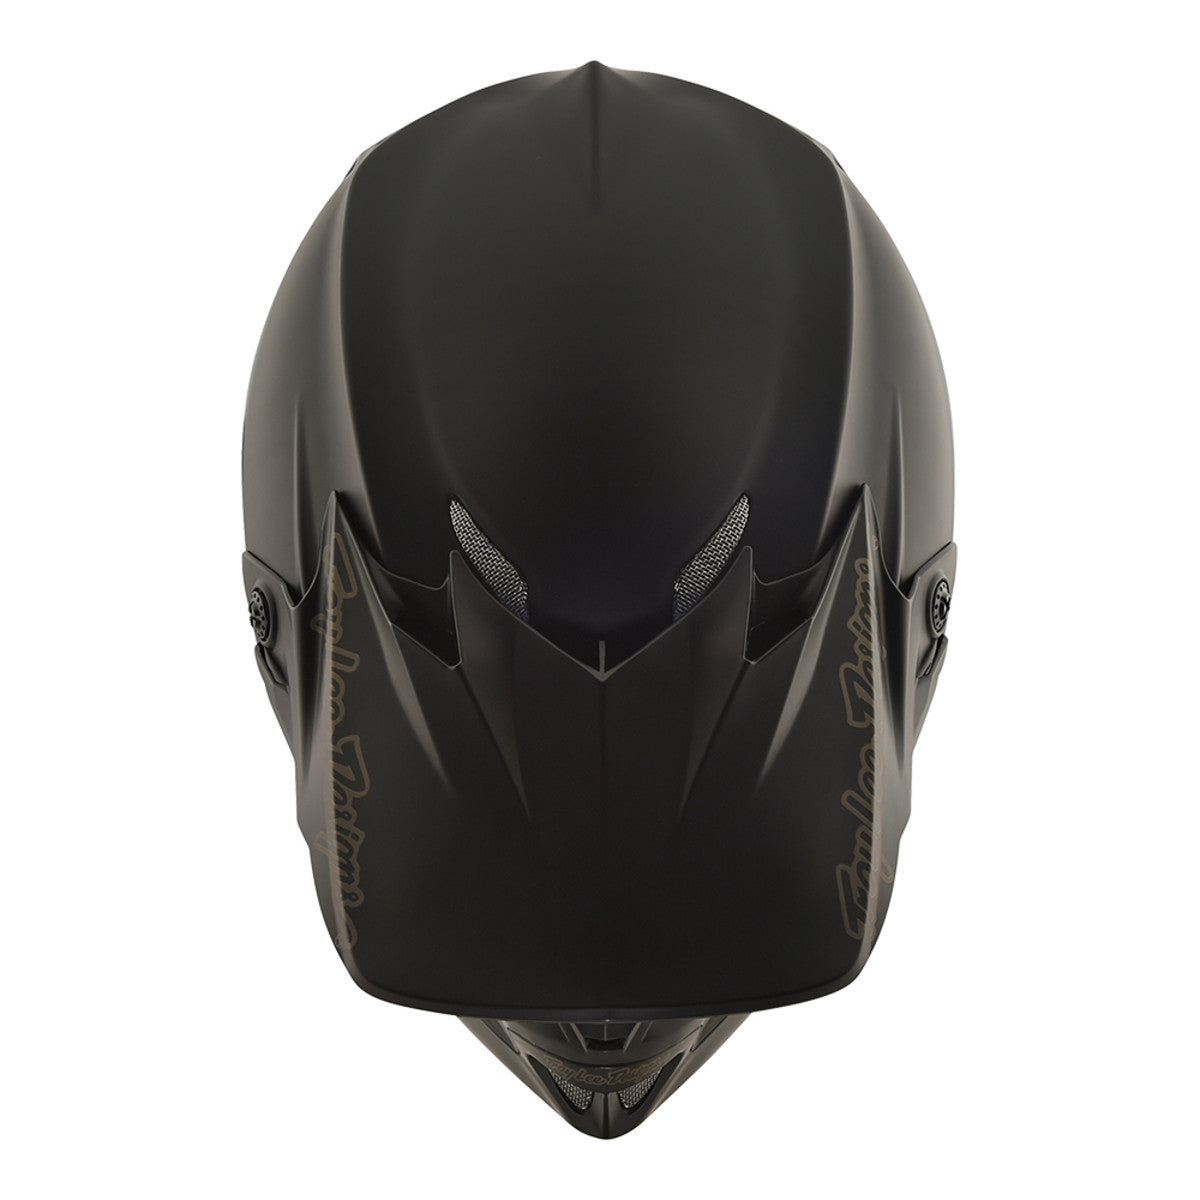 Troy Lee Designs MX | 2018 SE4 Polyacrylite Motocross Helmets